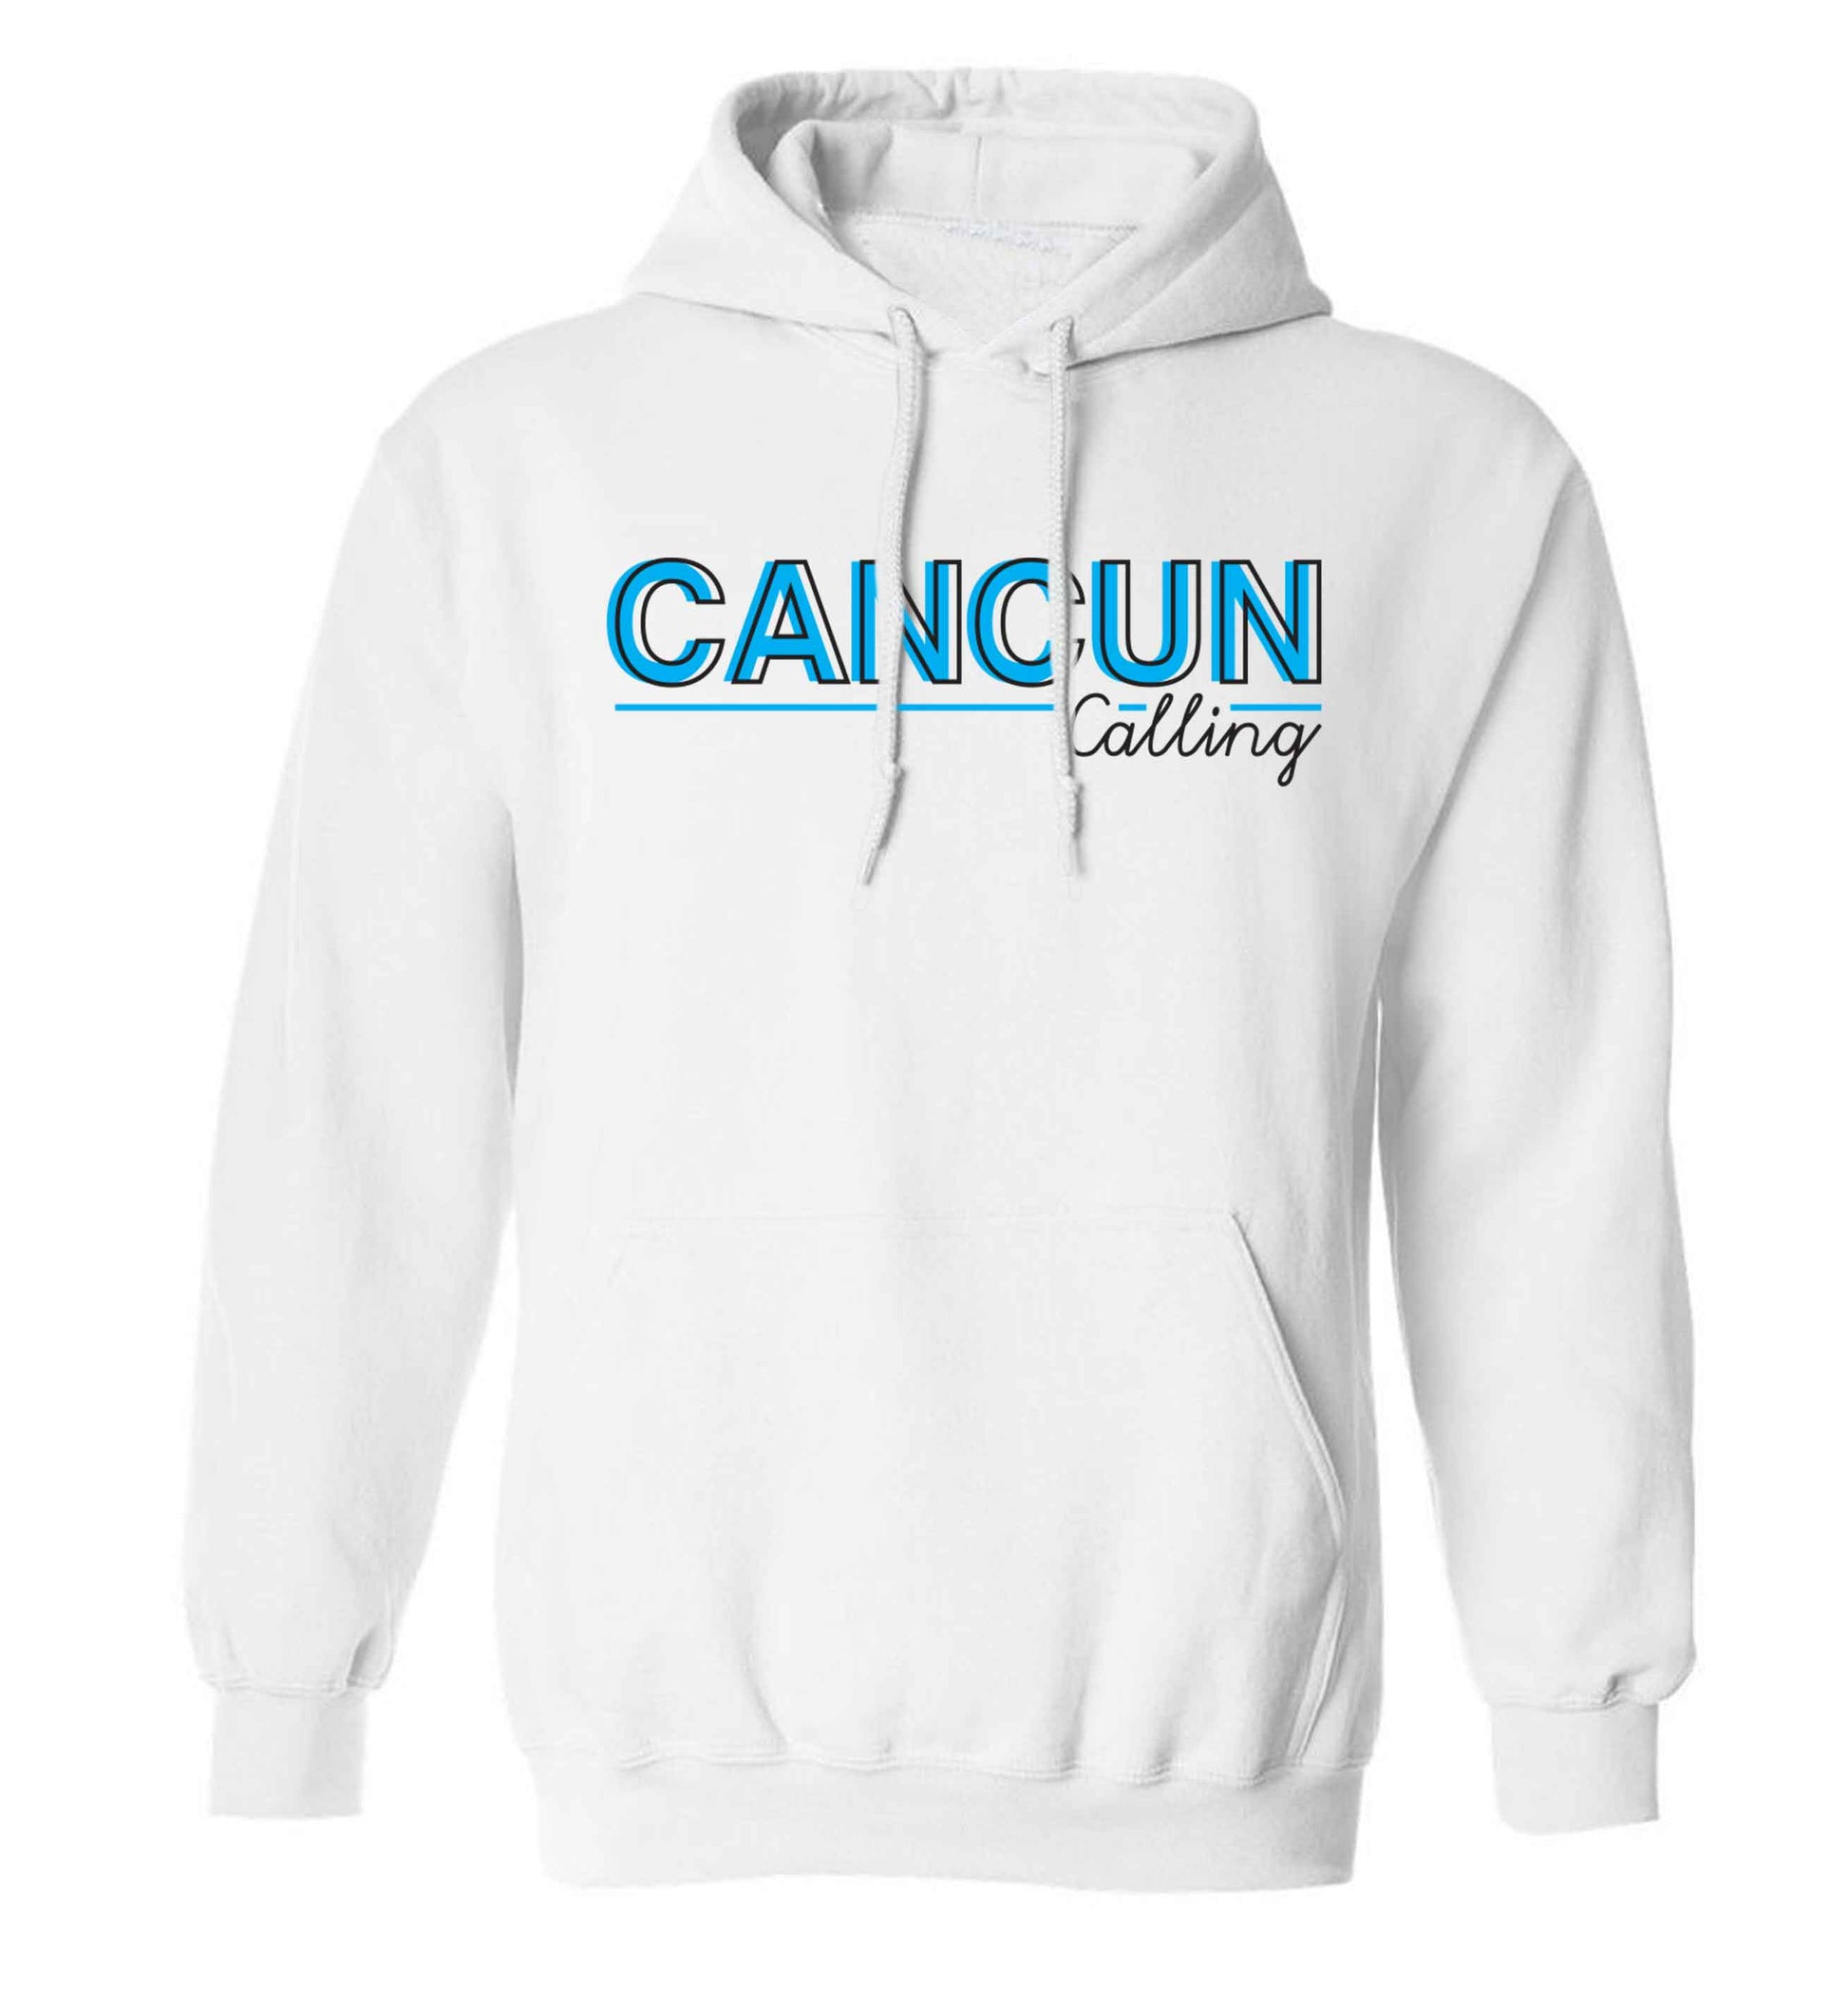 Cancun calling adults unisex white hoodie 2XL